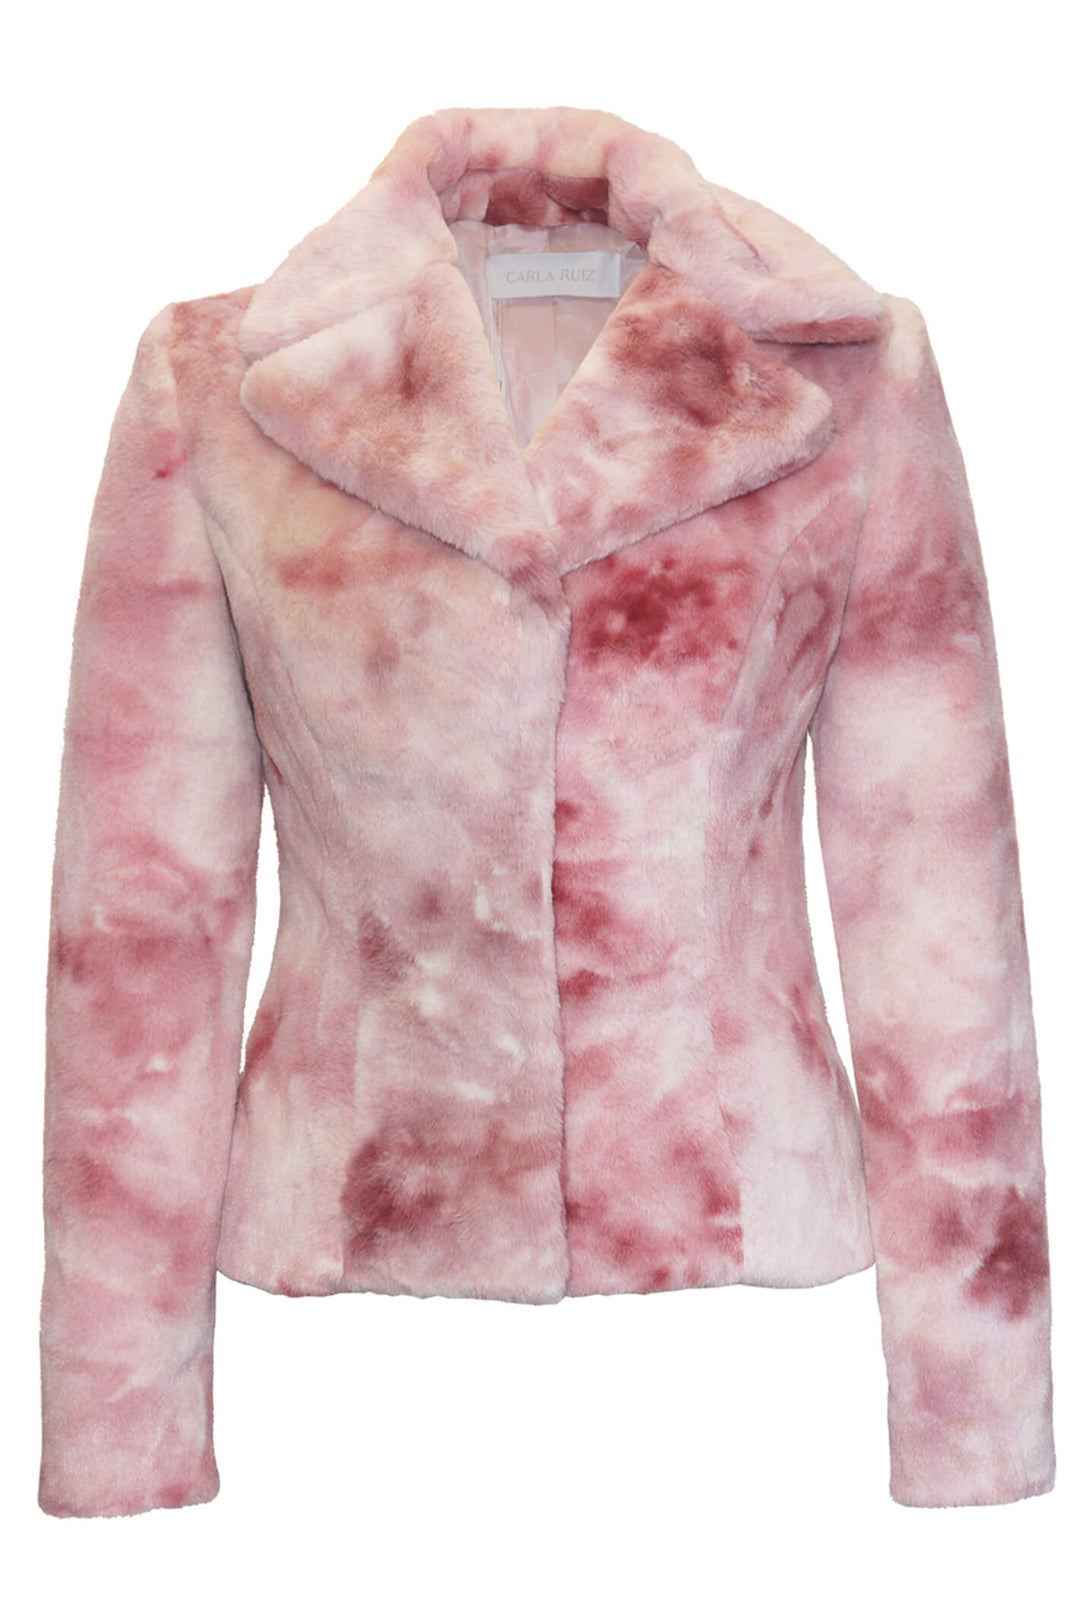 Carla Ruiz 99057 Pink Marble Faux Fur Jacket - Experience Boutique